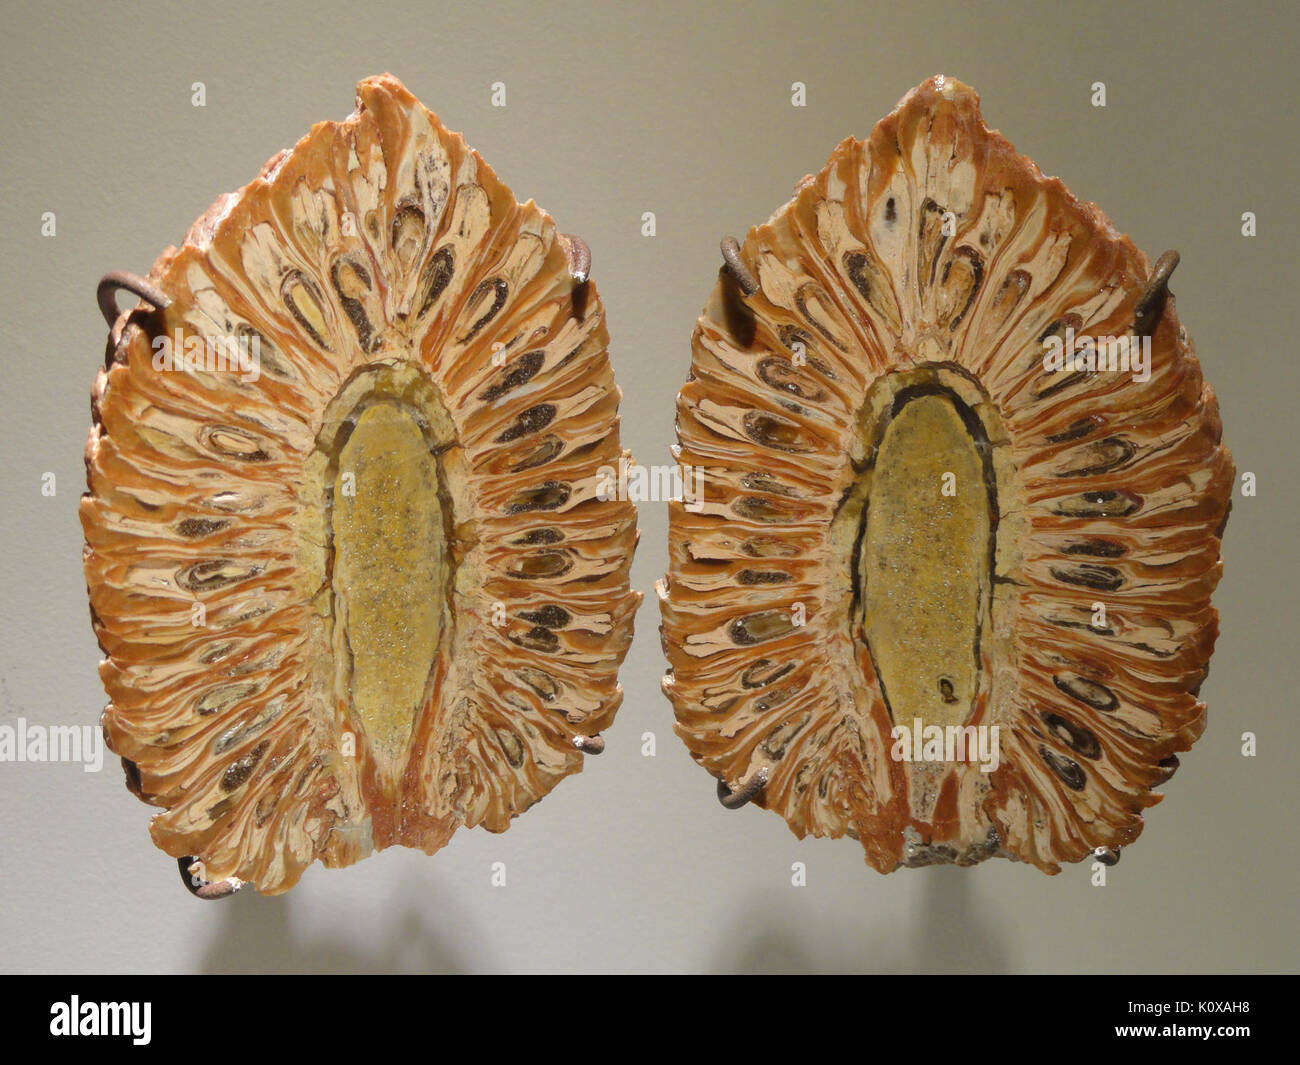 Araucaria mirabilis, pine cone split in half, La Matilde Formation, Patagonia, Argentina   Houston Museum of Natural Science   DSC01879 Stock Photo